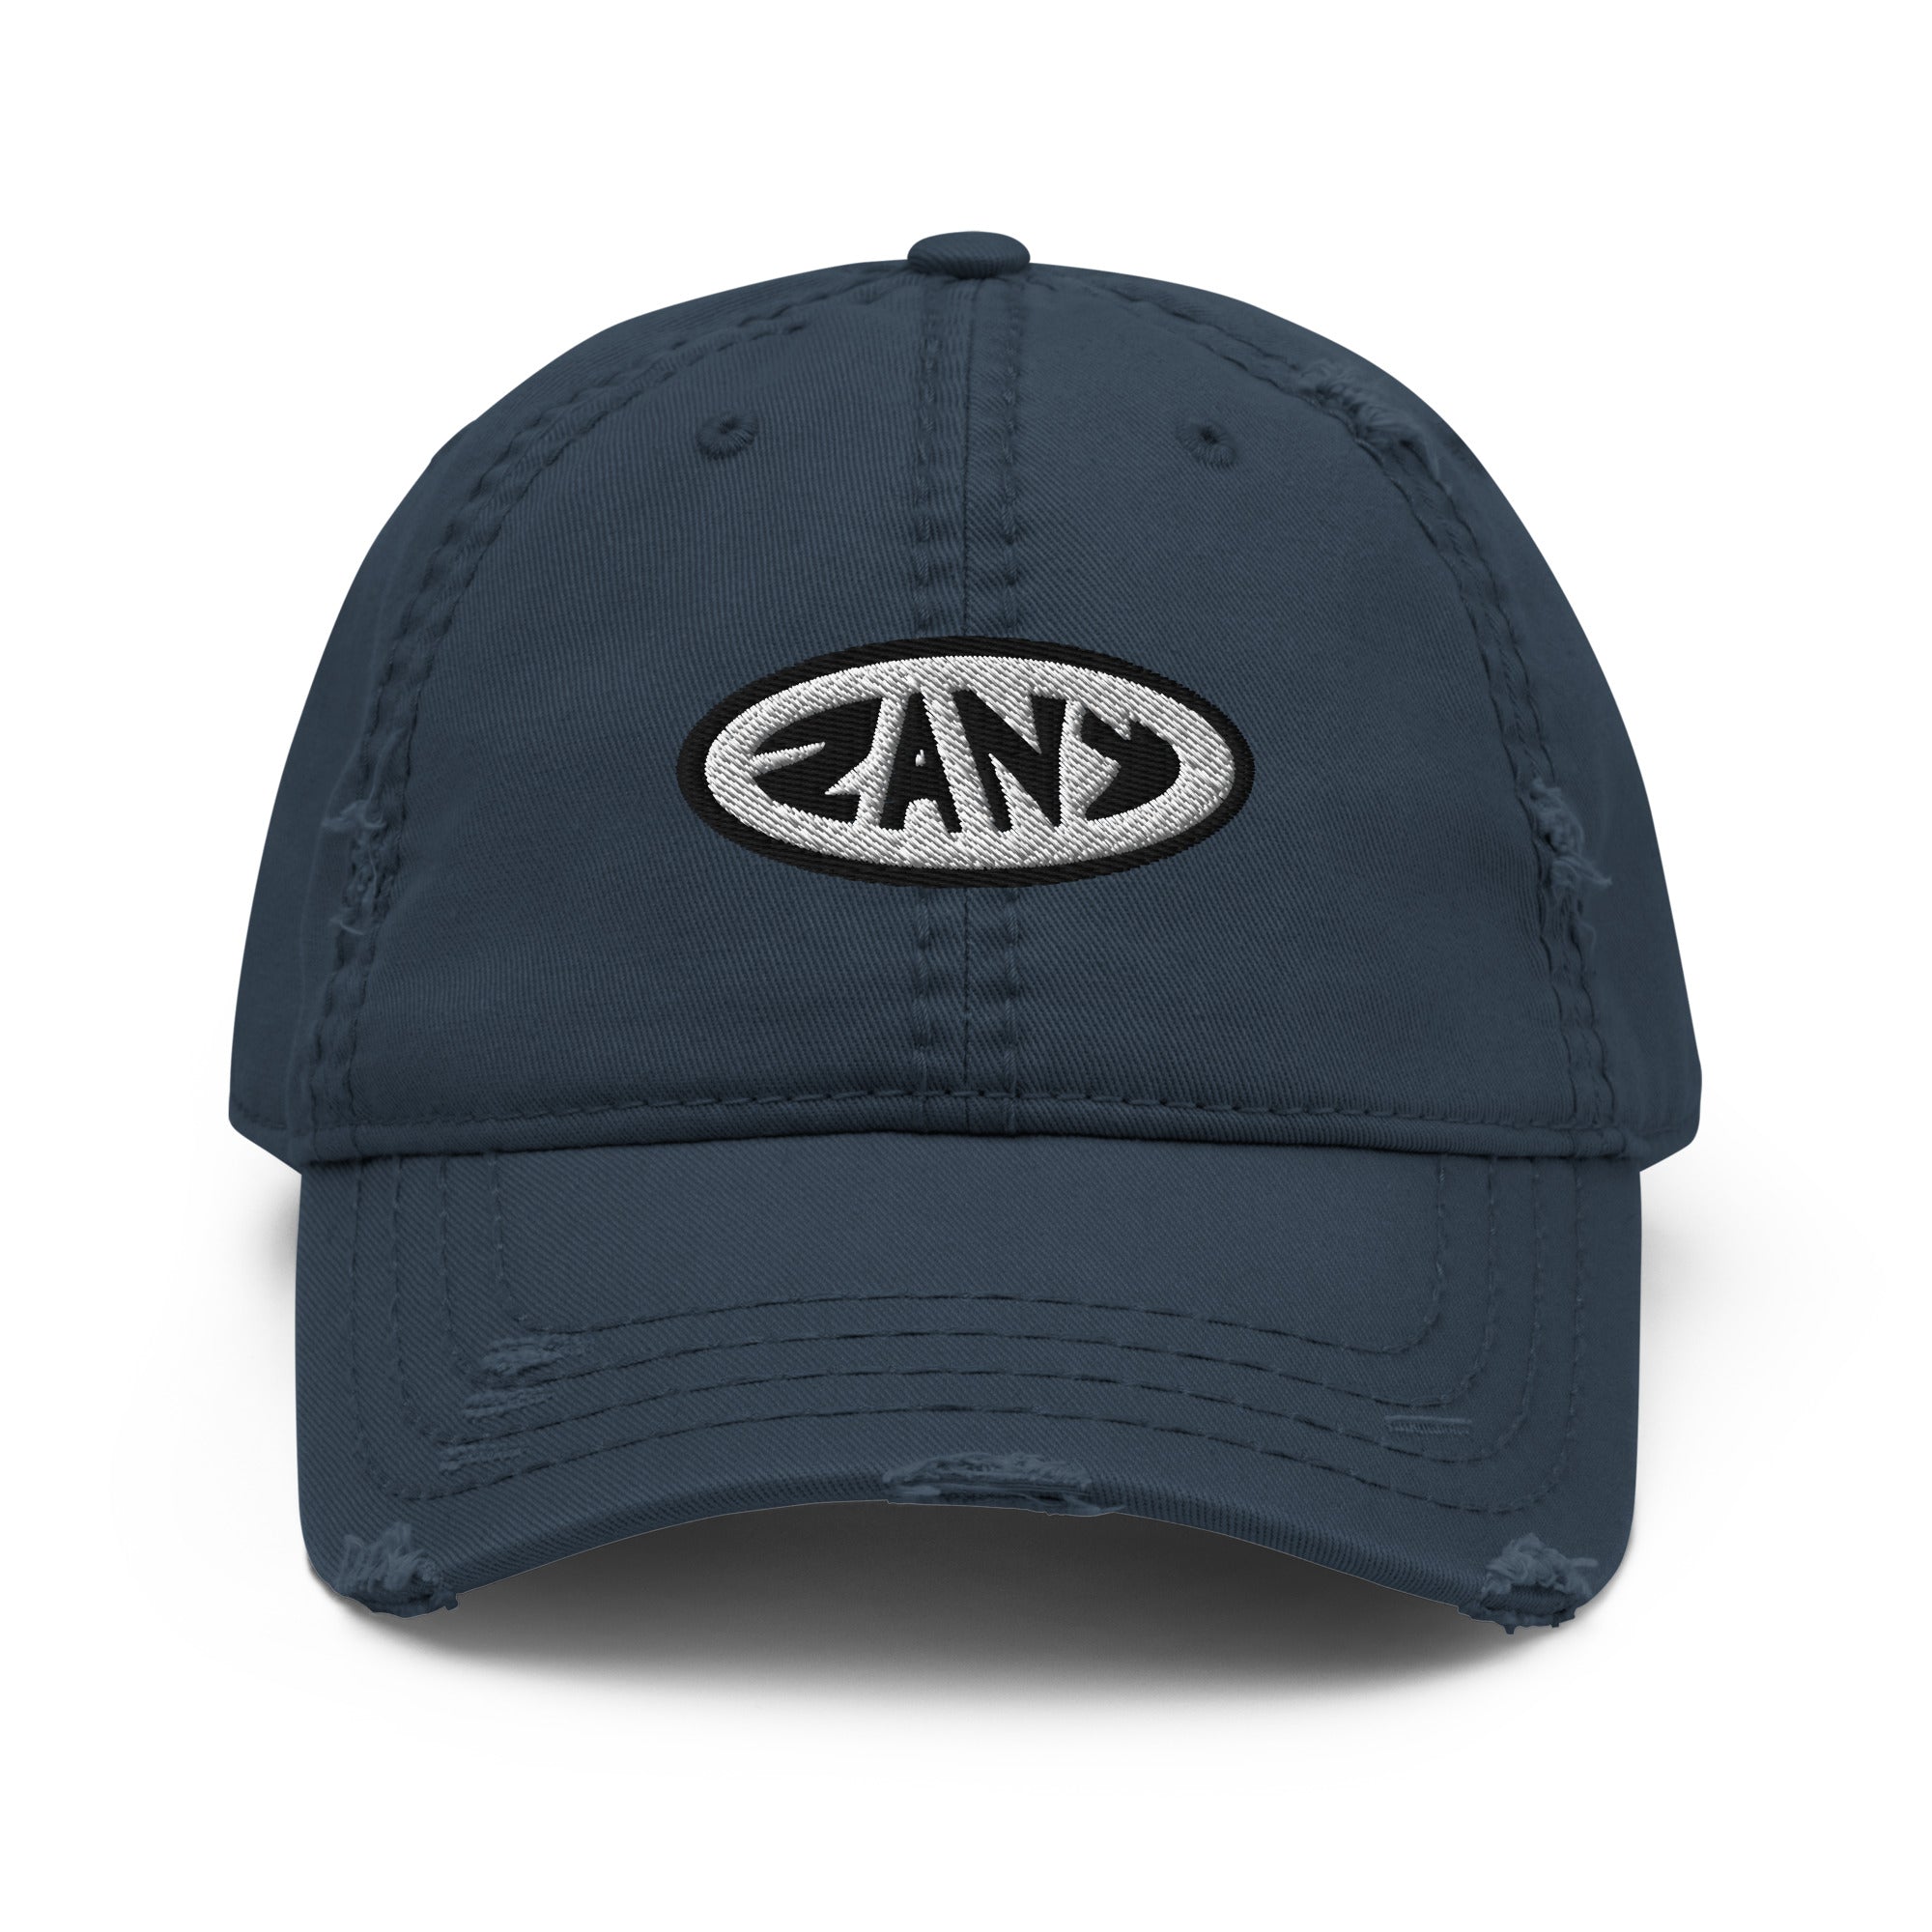 ZANY logo Distressed Dad Hat